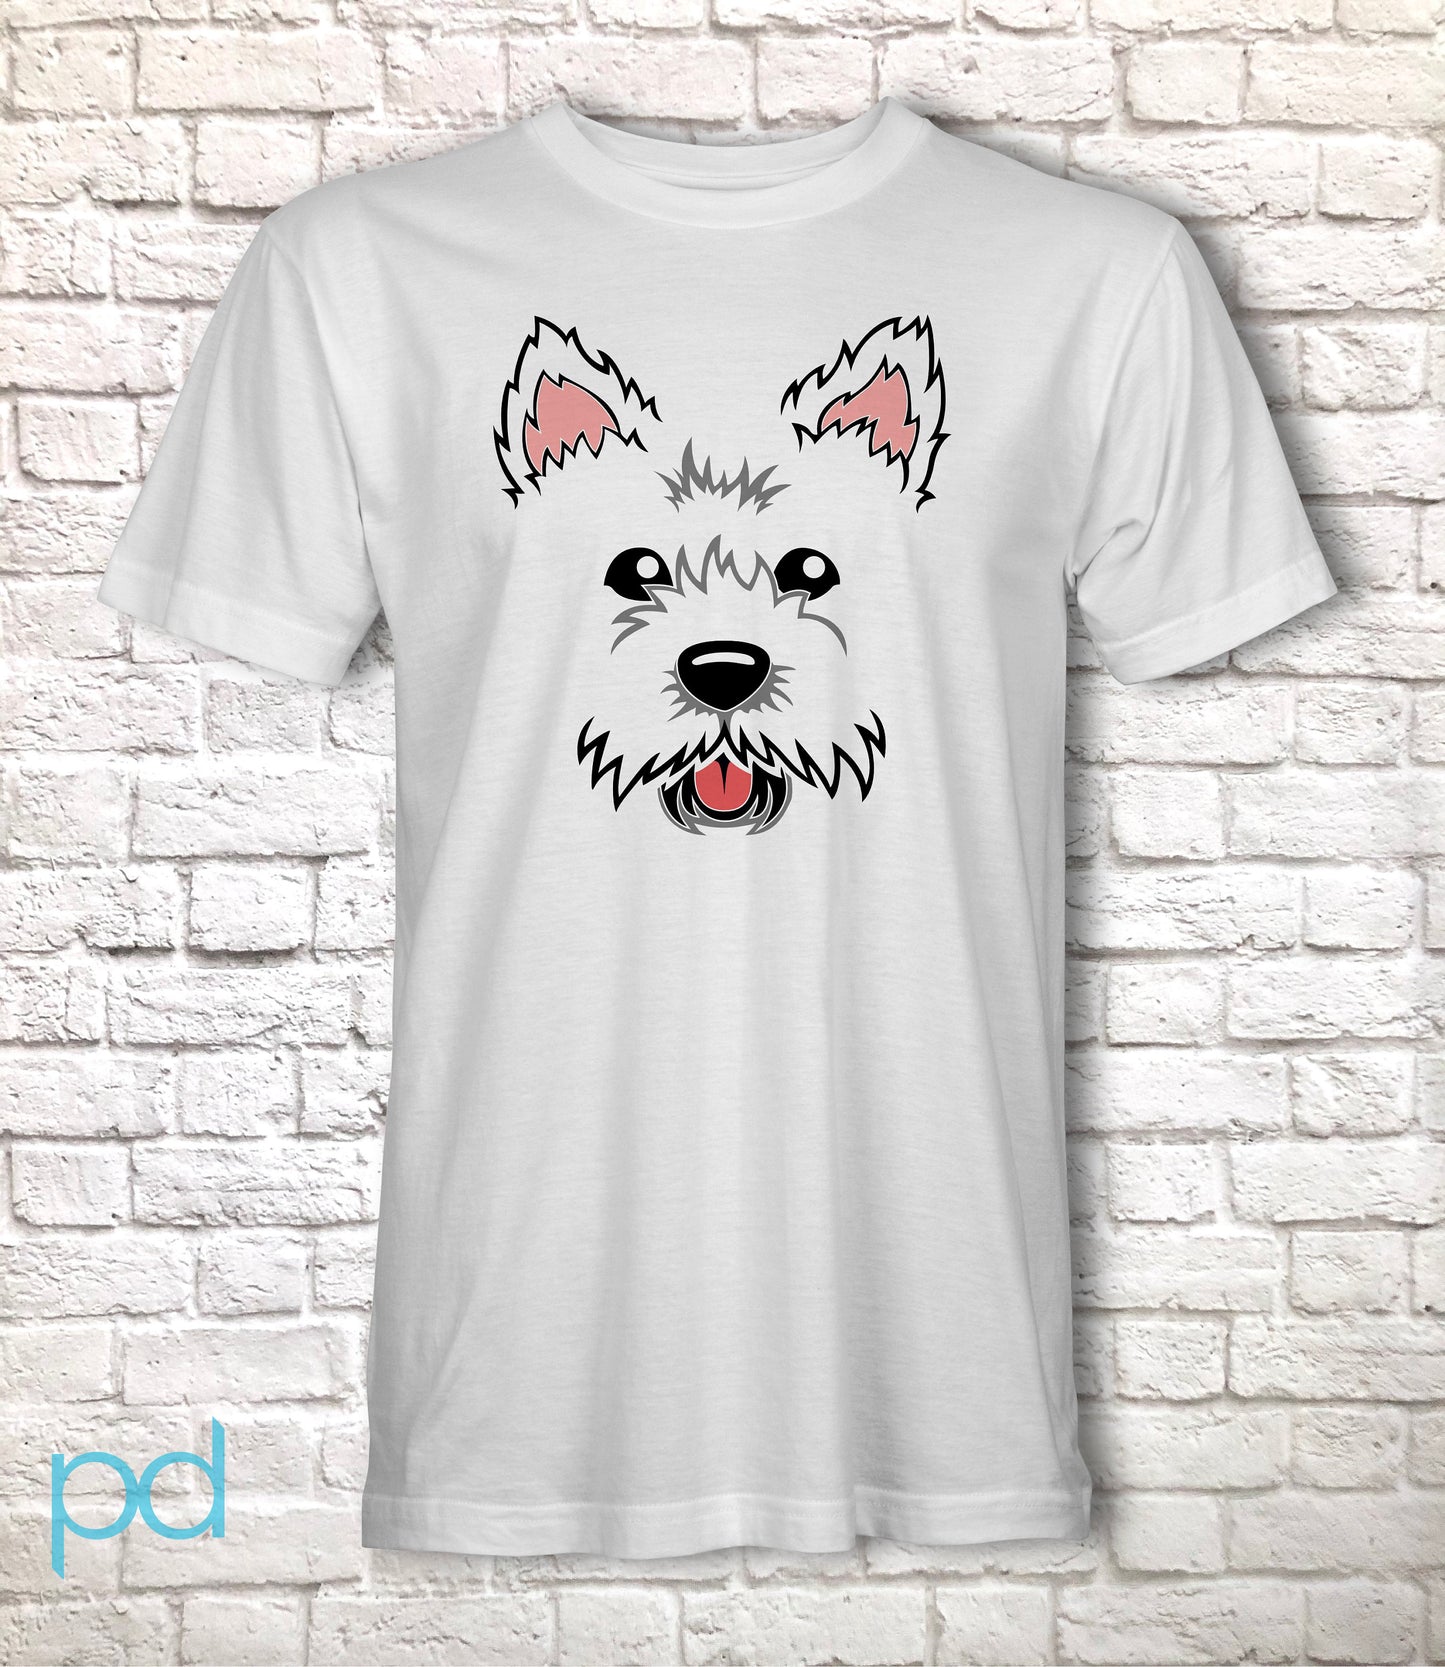 Cute Westie T-Shirt, West Highland Terrier Gift Idea, Adorable Fluffy Dog Face Tee Shirt T Top